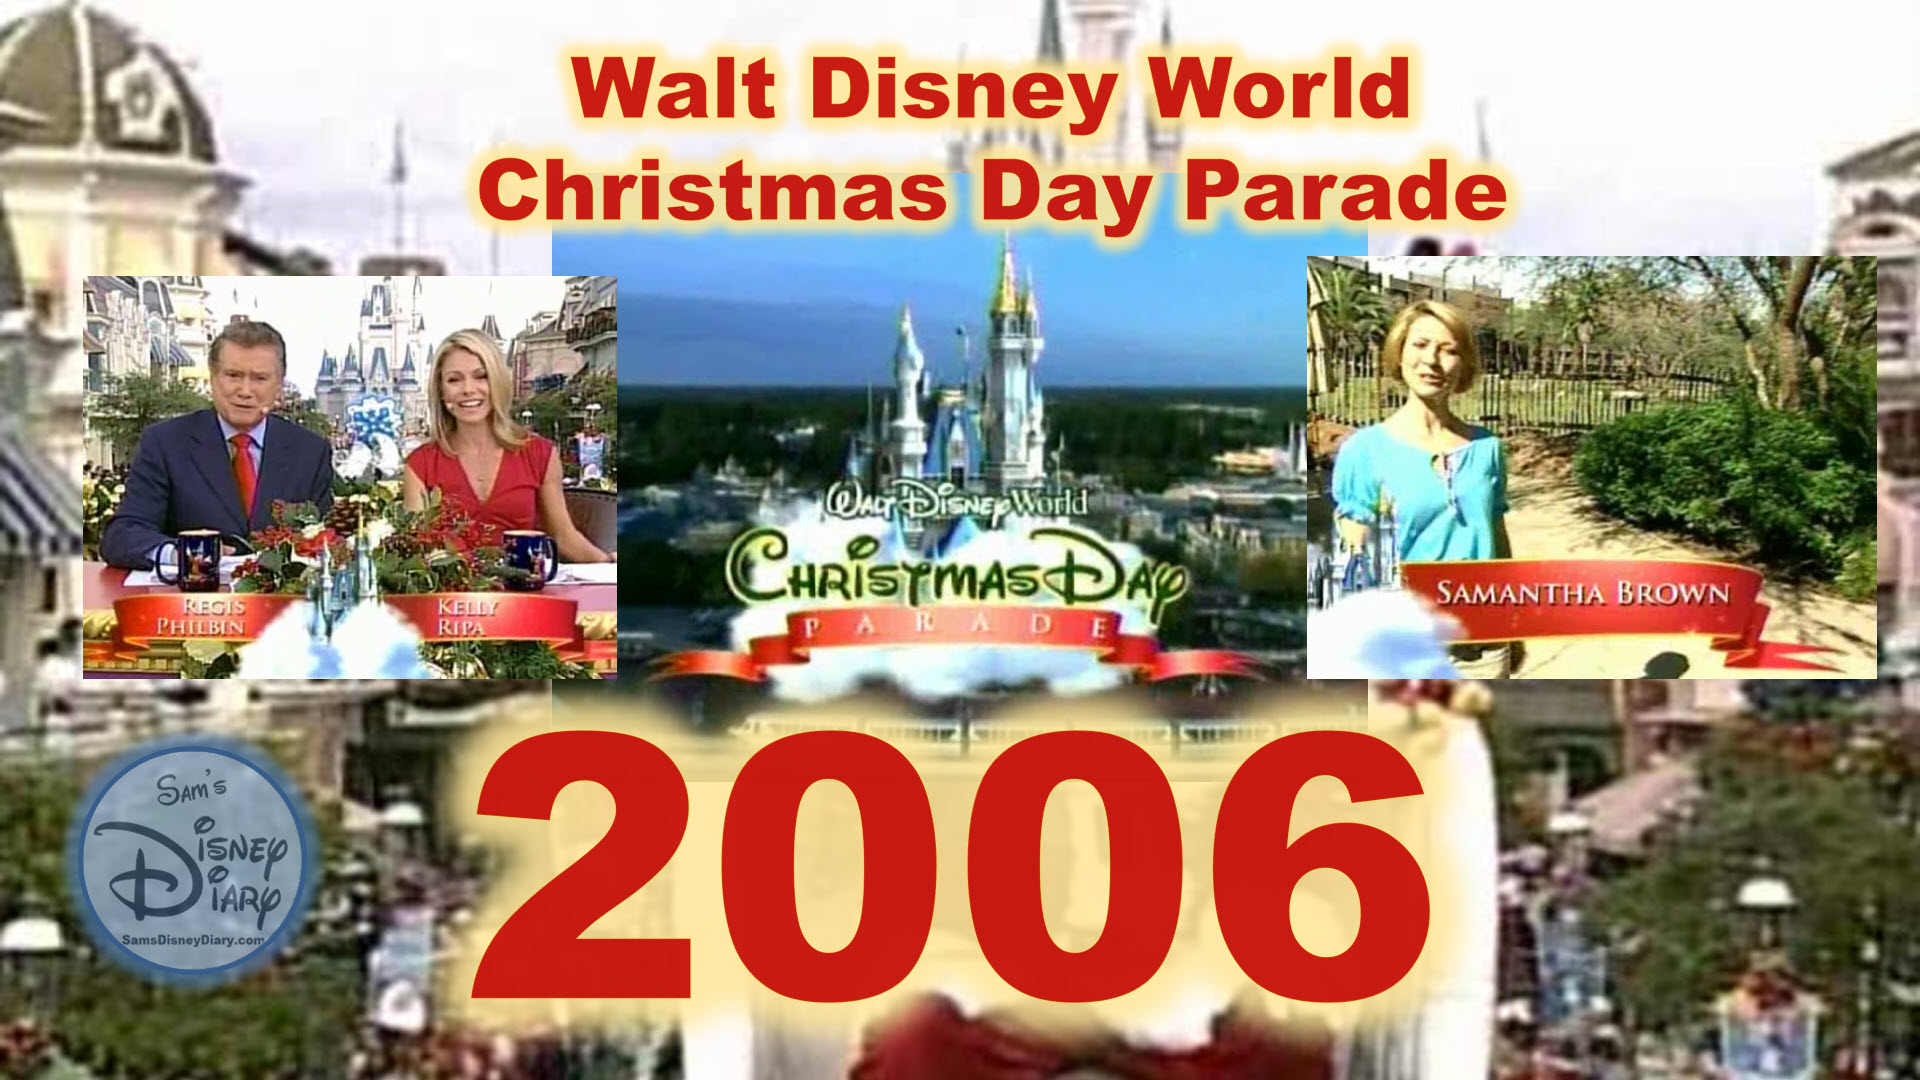 2006 Walt Disney World Christmas Day Parade